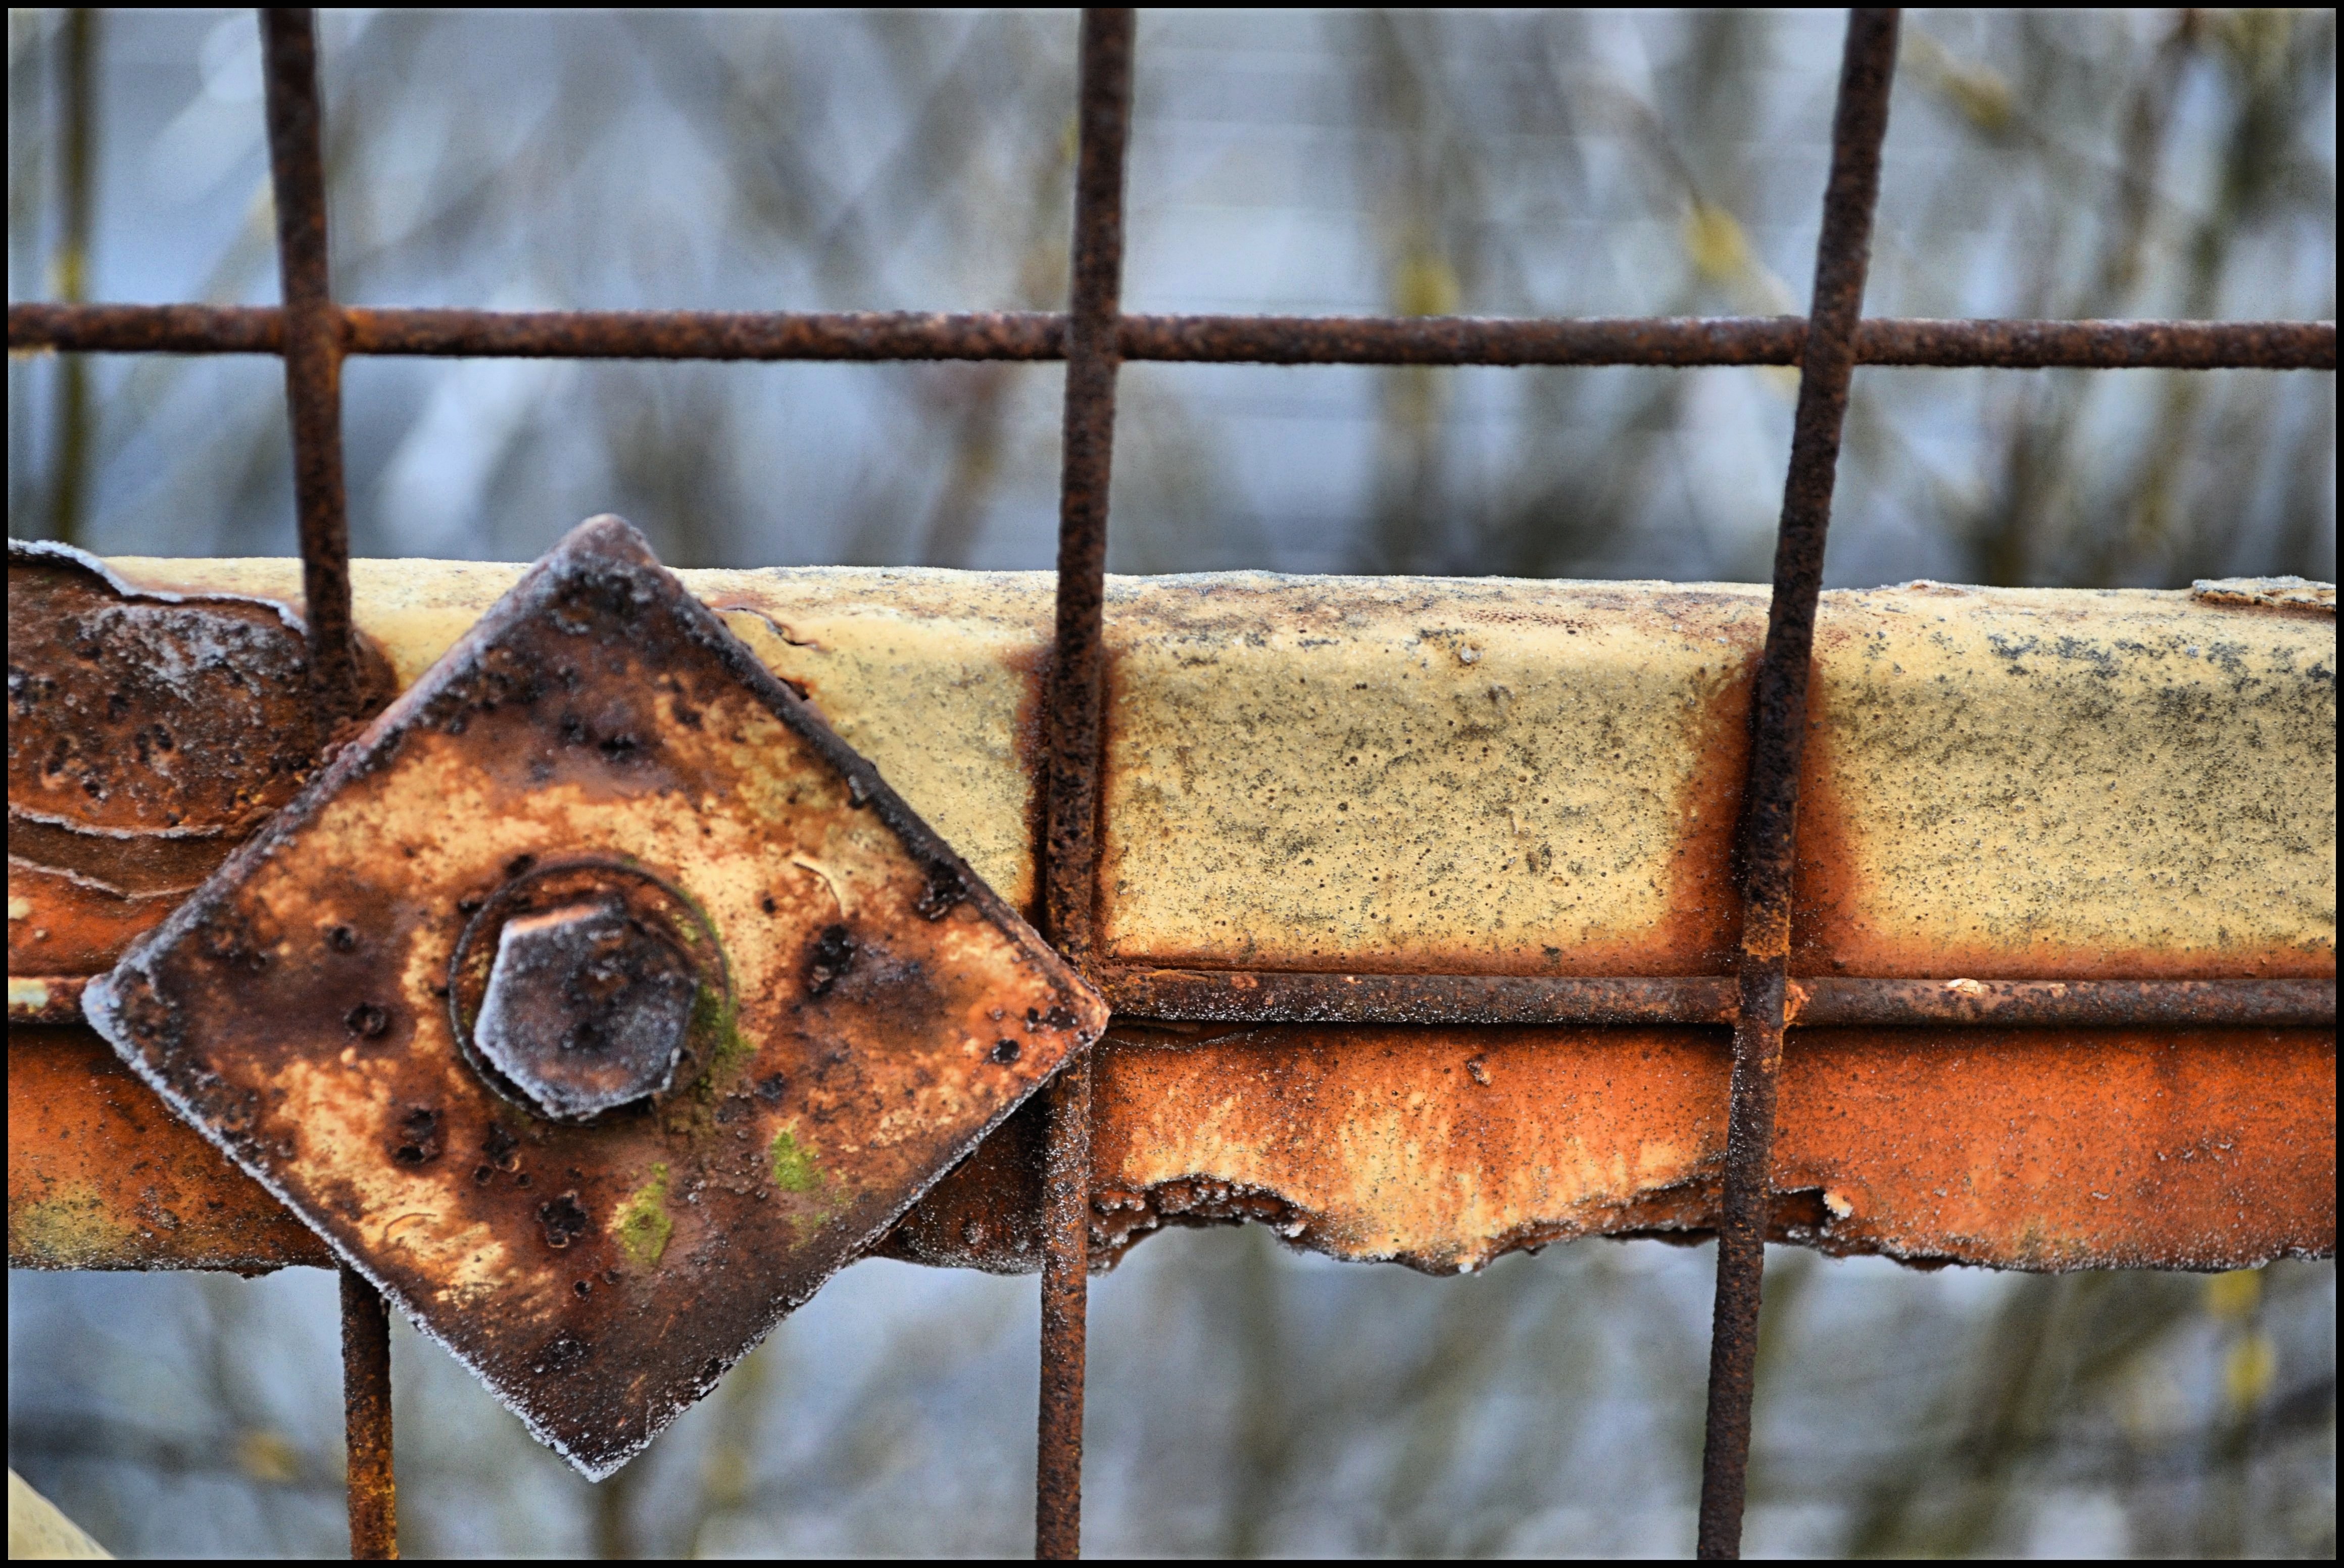 File:Rusty fence (8250708322).jpg - Wikimedia Commons